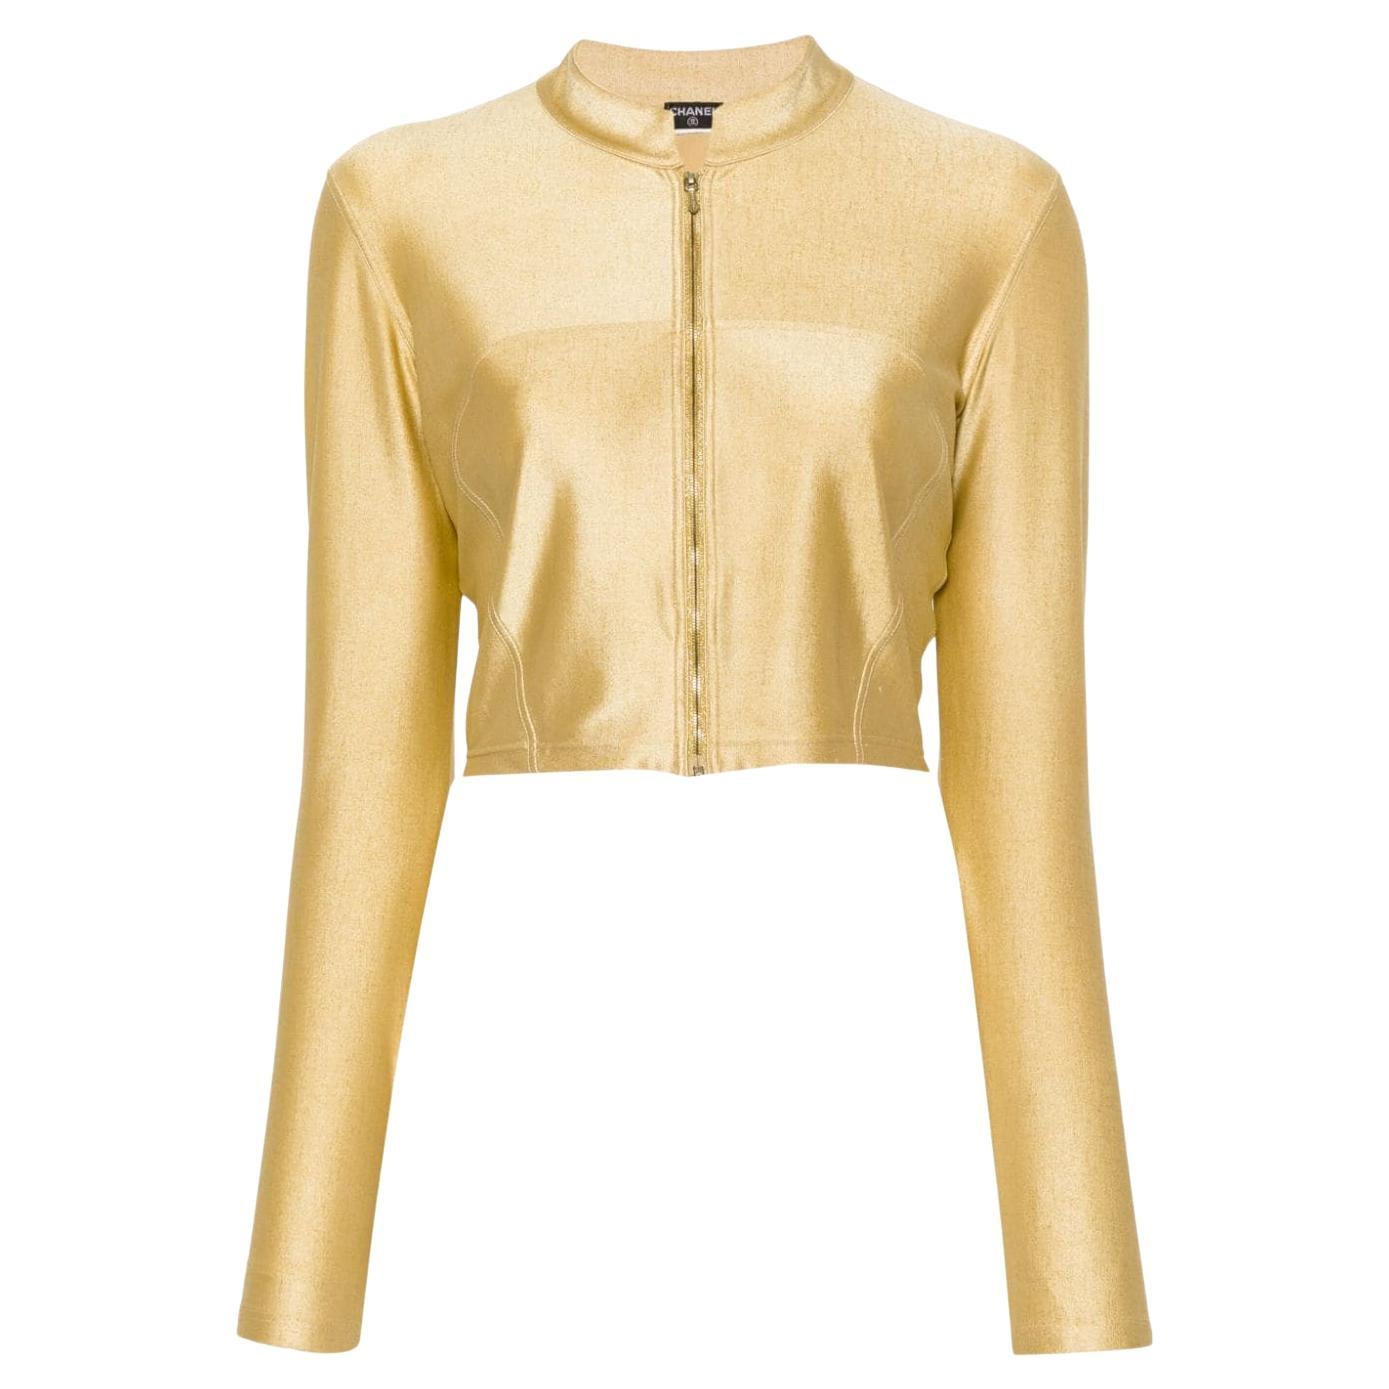  Chanel - Veste courte en métal doré en vente